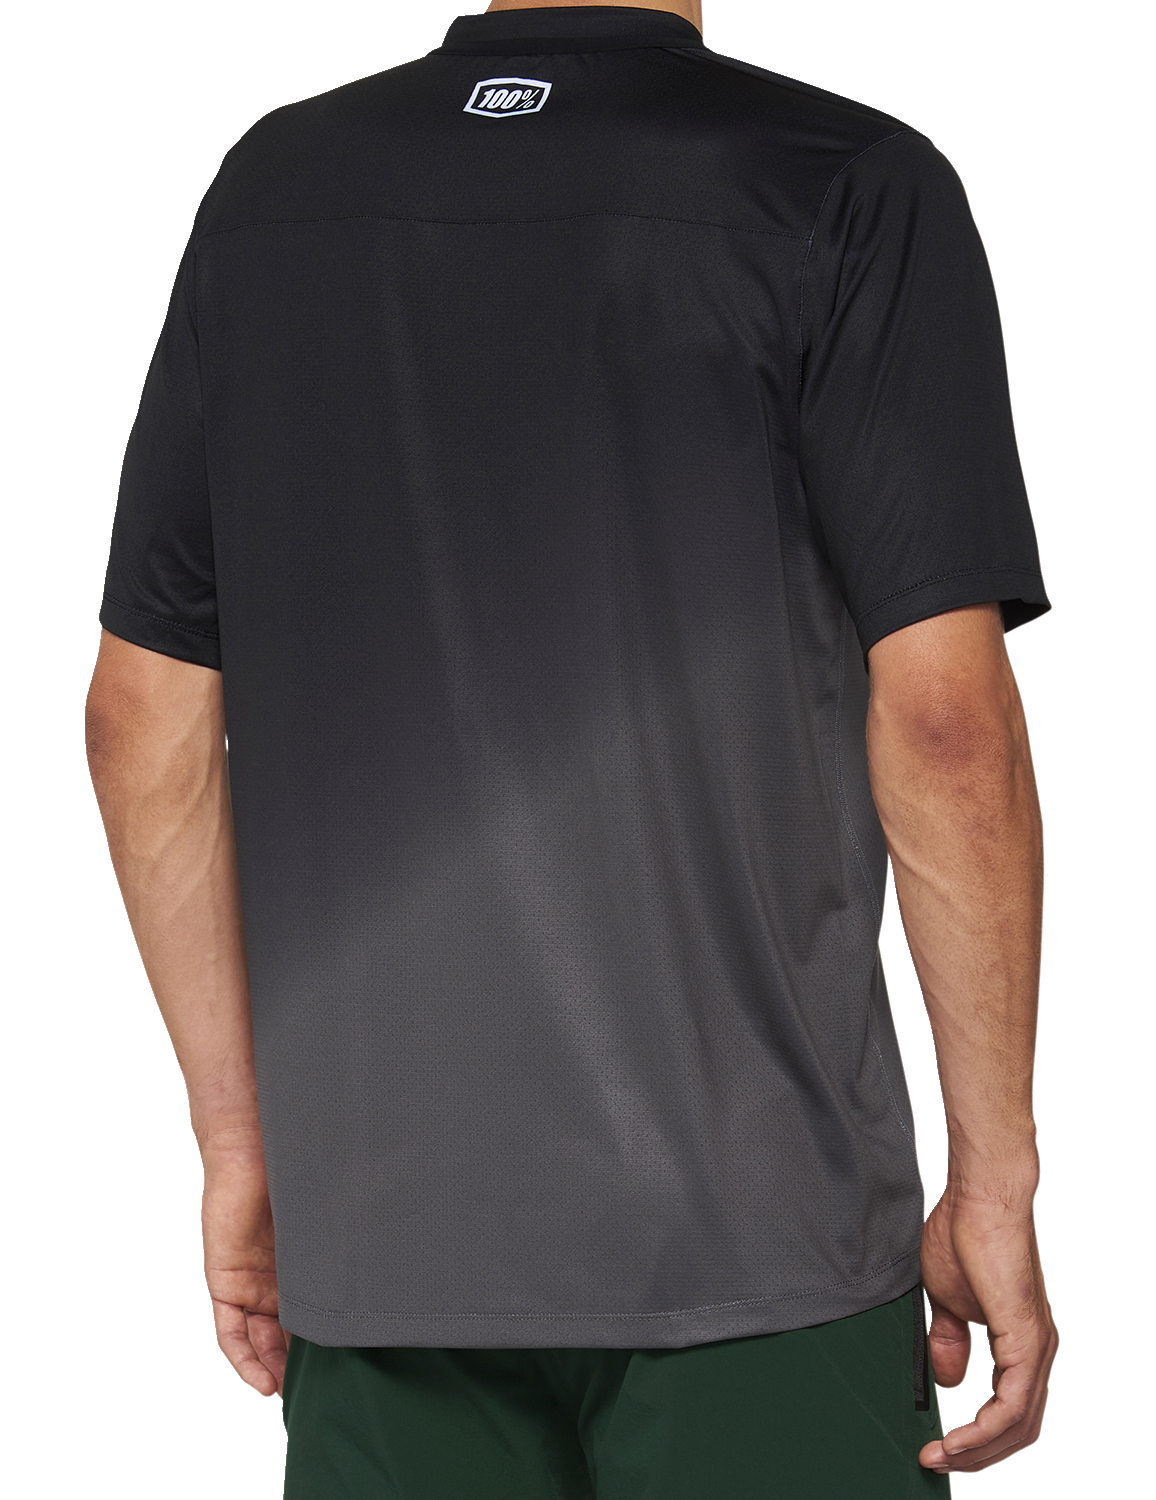 100% Celium Jersey - Short-Sleeve - Black/Charcoal - XL 40011-00003